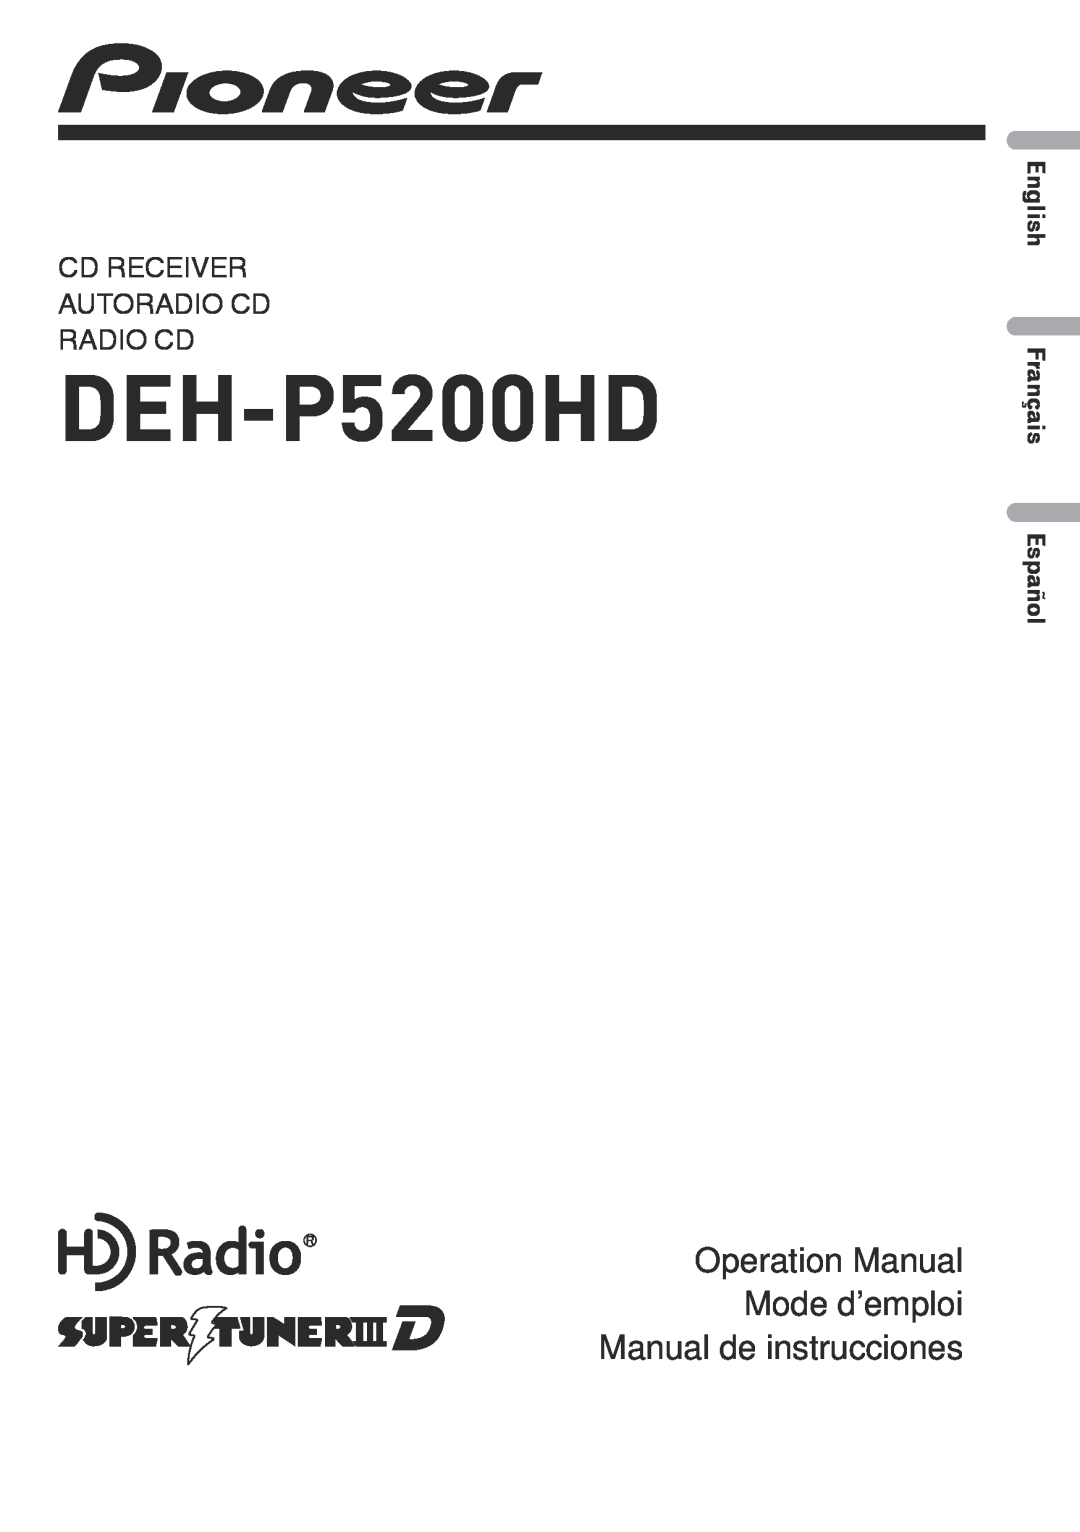 Pioneer DEH-P5200HD operation manual Cd Receiver Autoradio Cd Radio Cd, English Français Español 